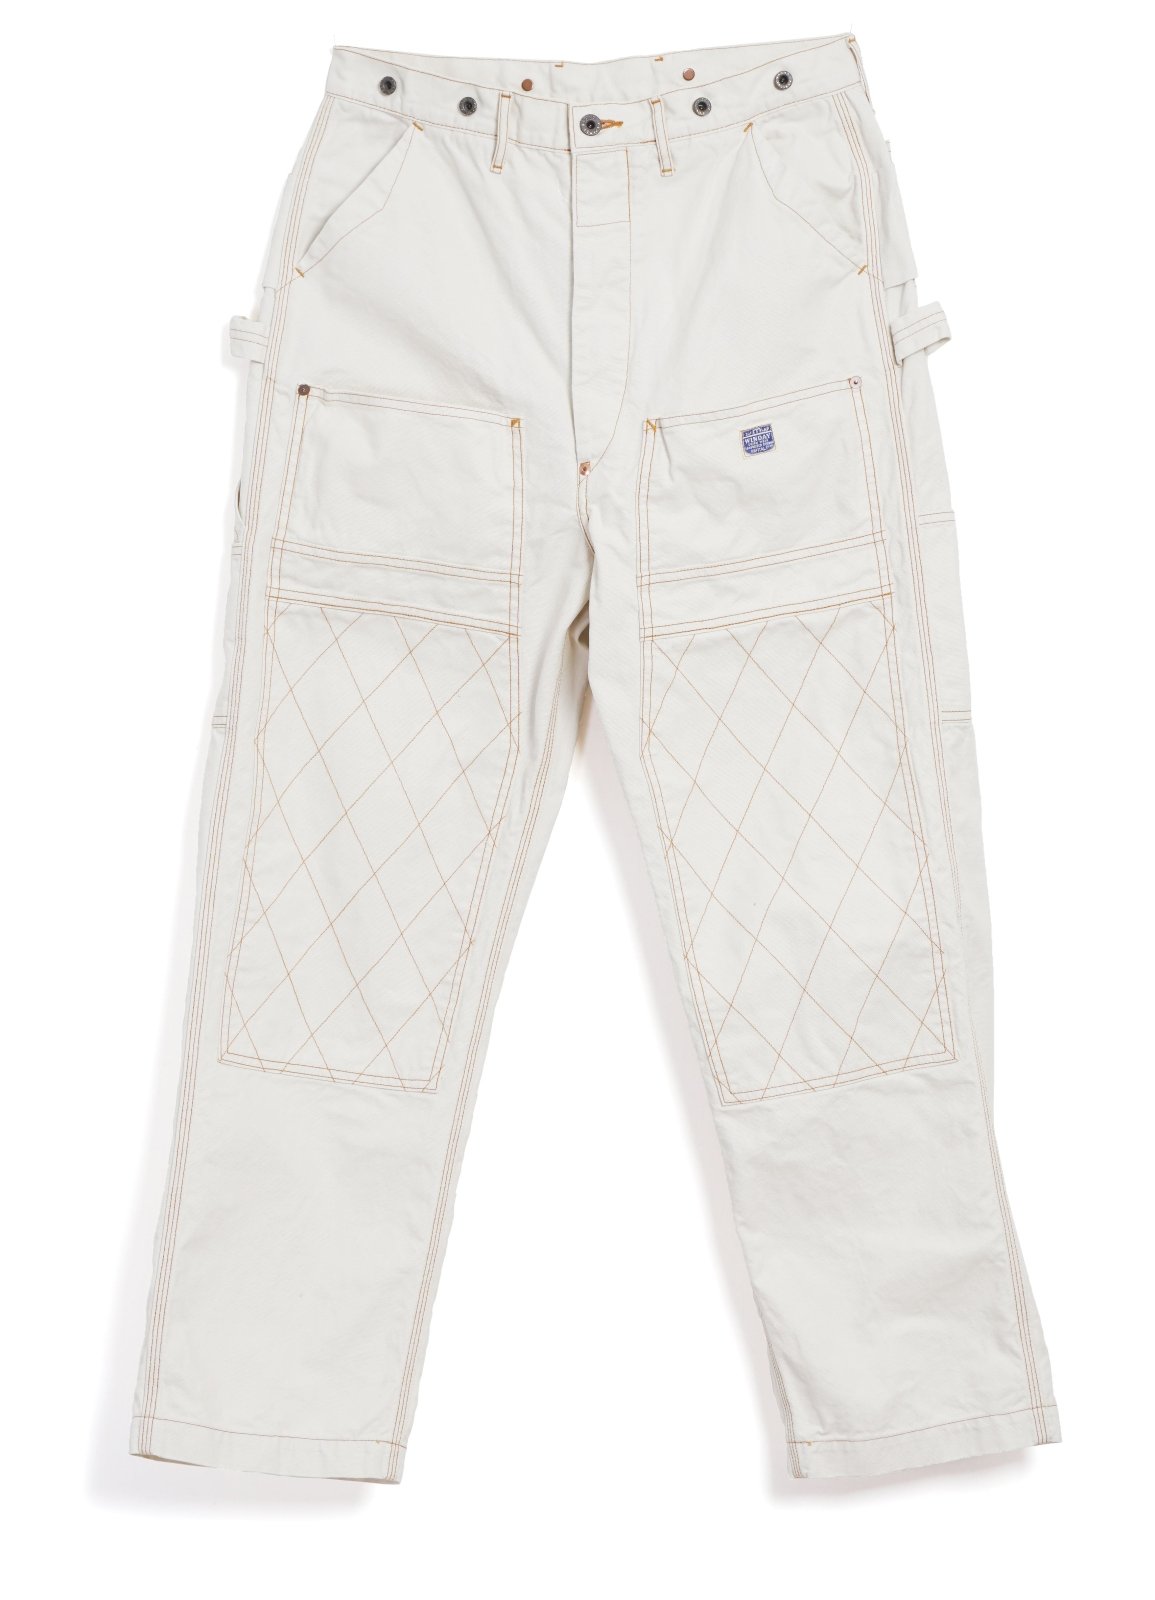 KAPITAL - LUMBER PANTS | Thin Canvas Trousers | Ecru - HANSEN Garments